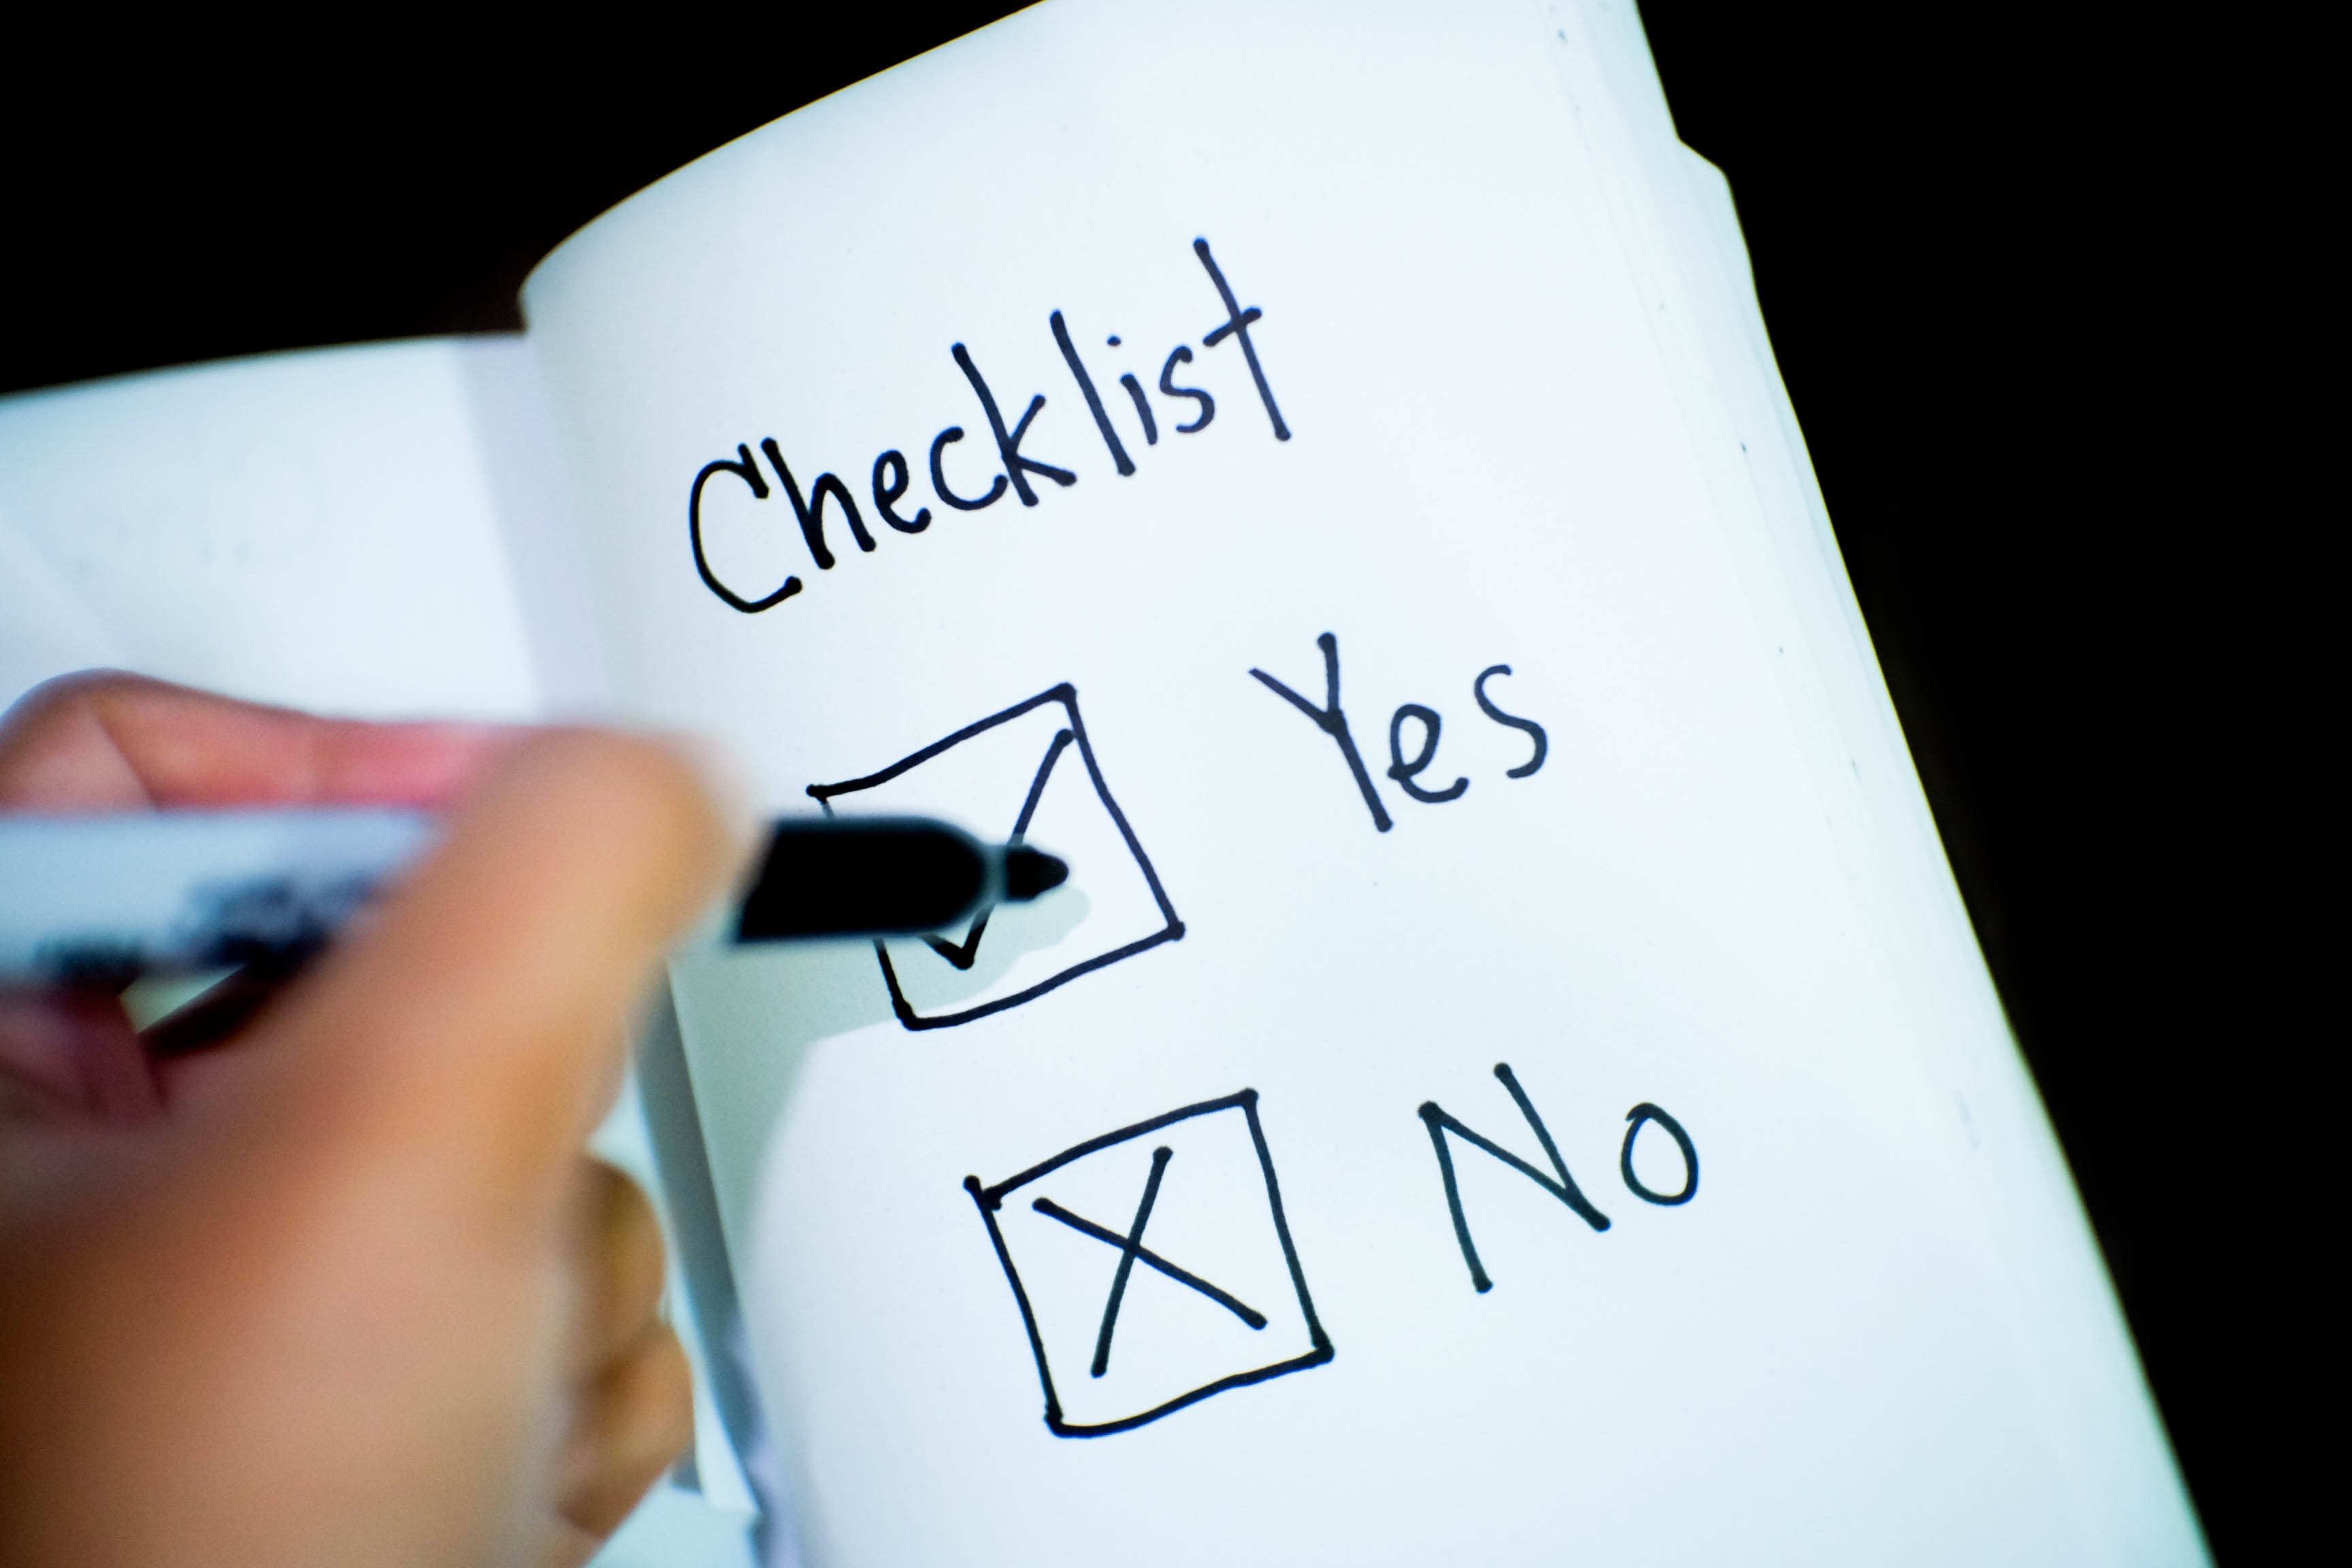 competitive resume checklist